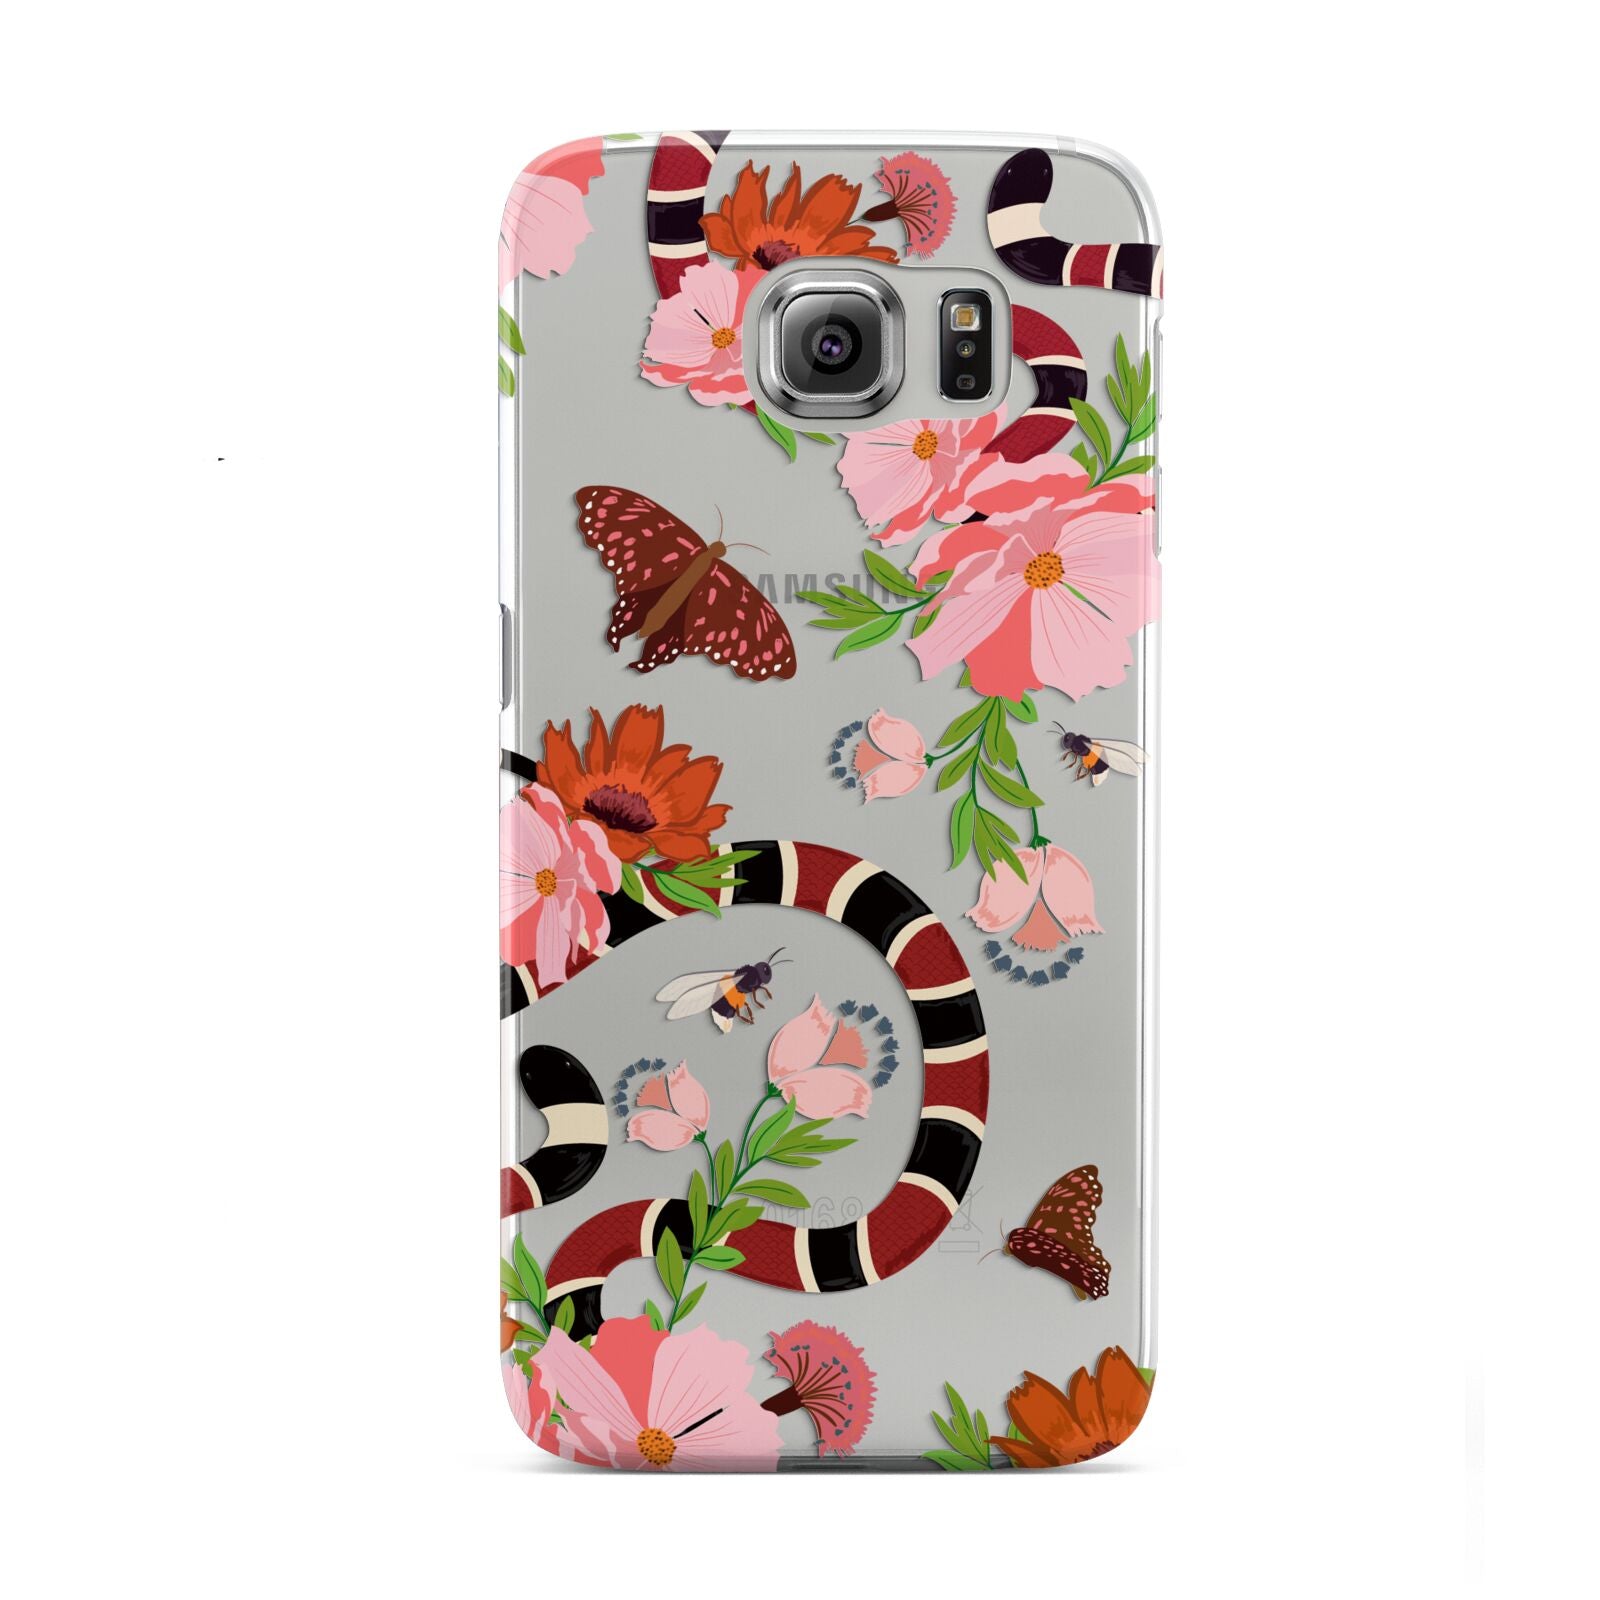 Floral Snake Samsung Galaxy S6 Case